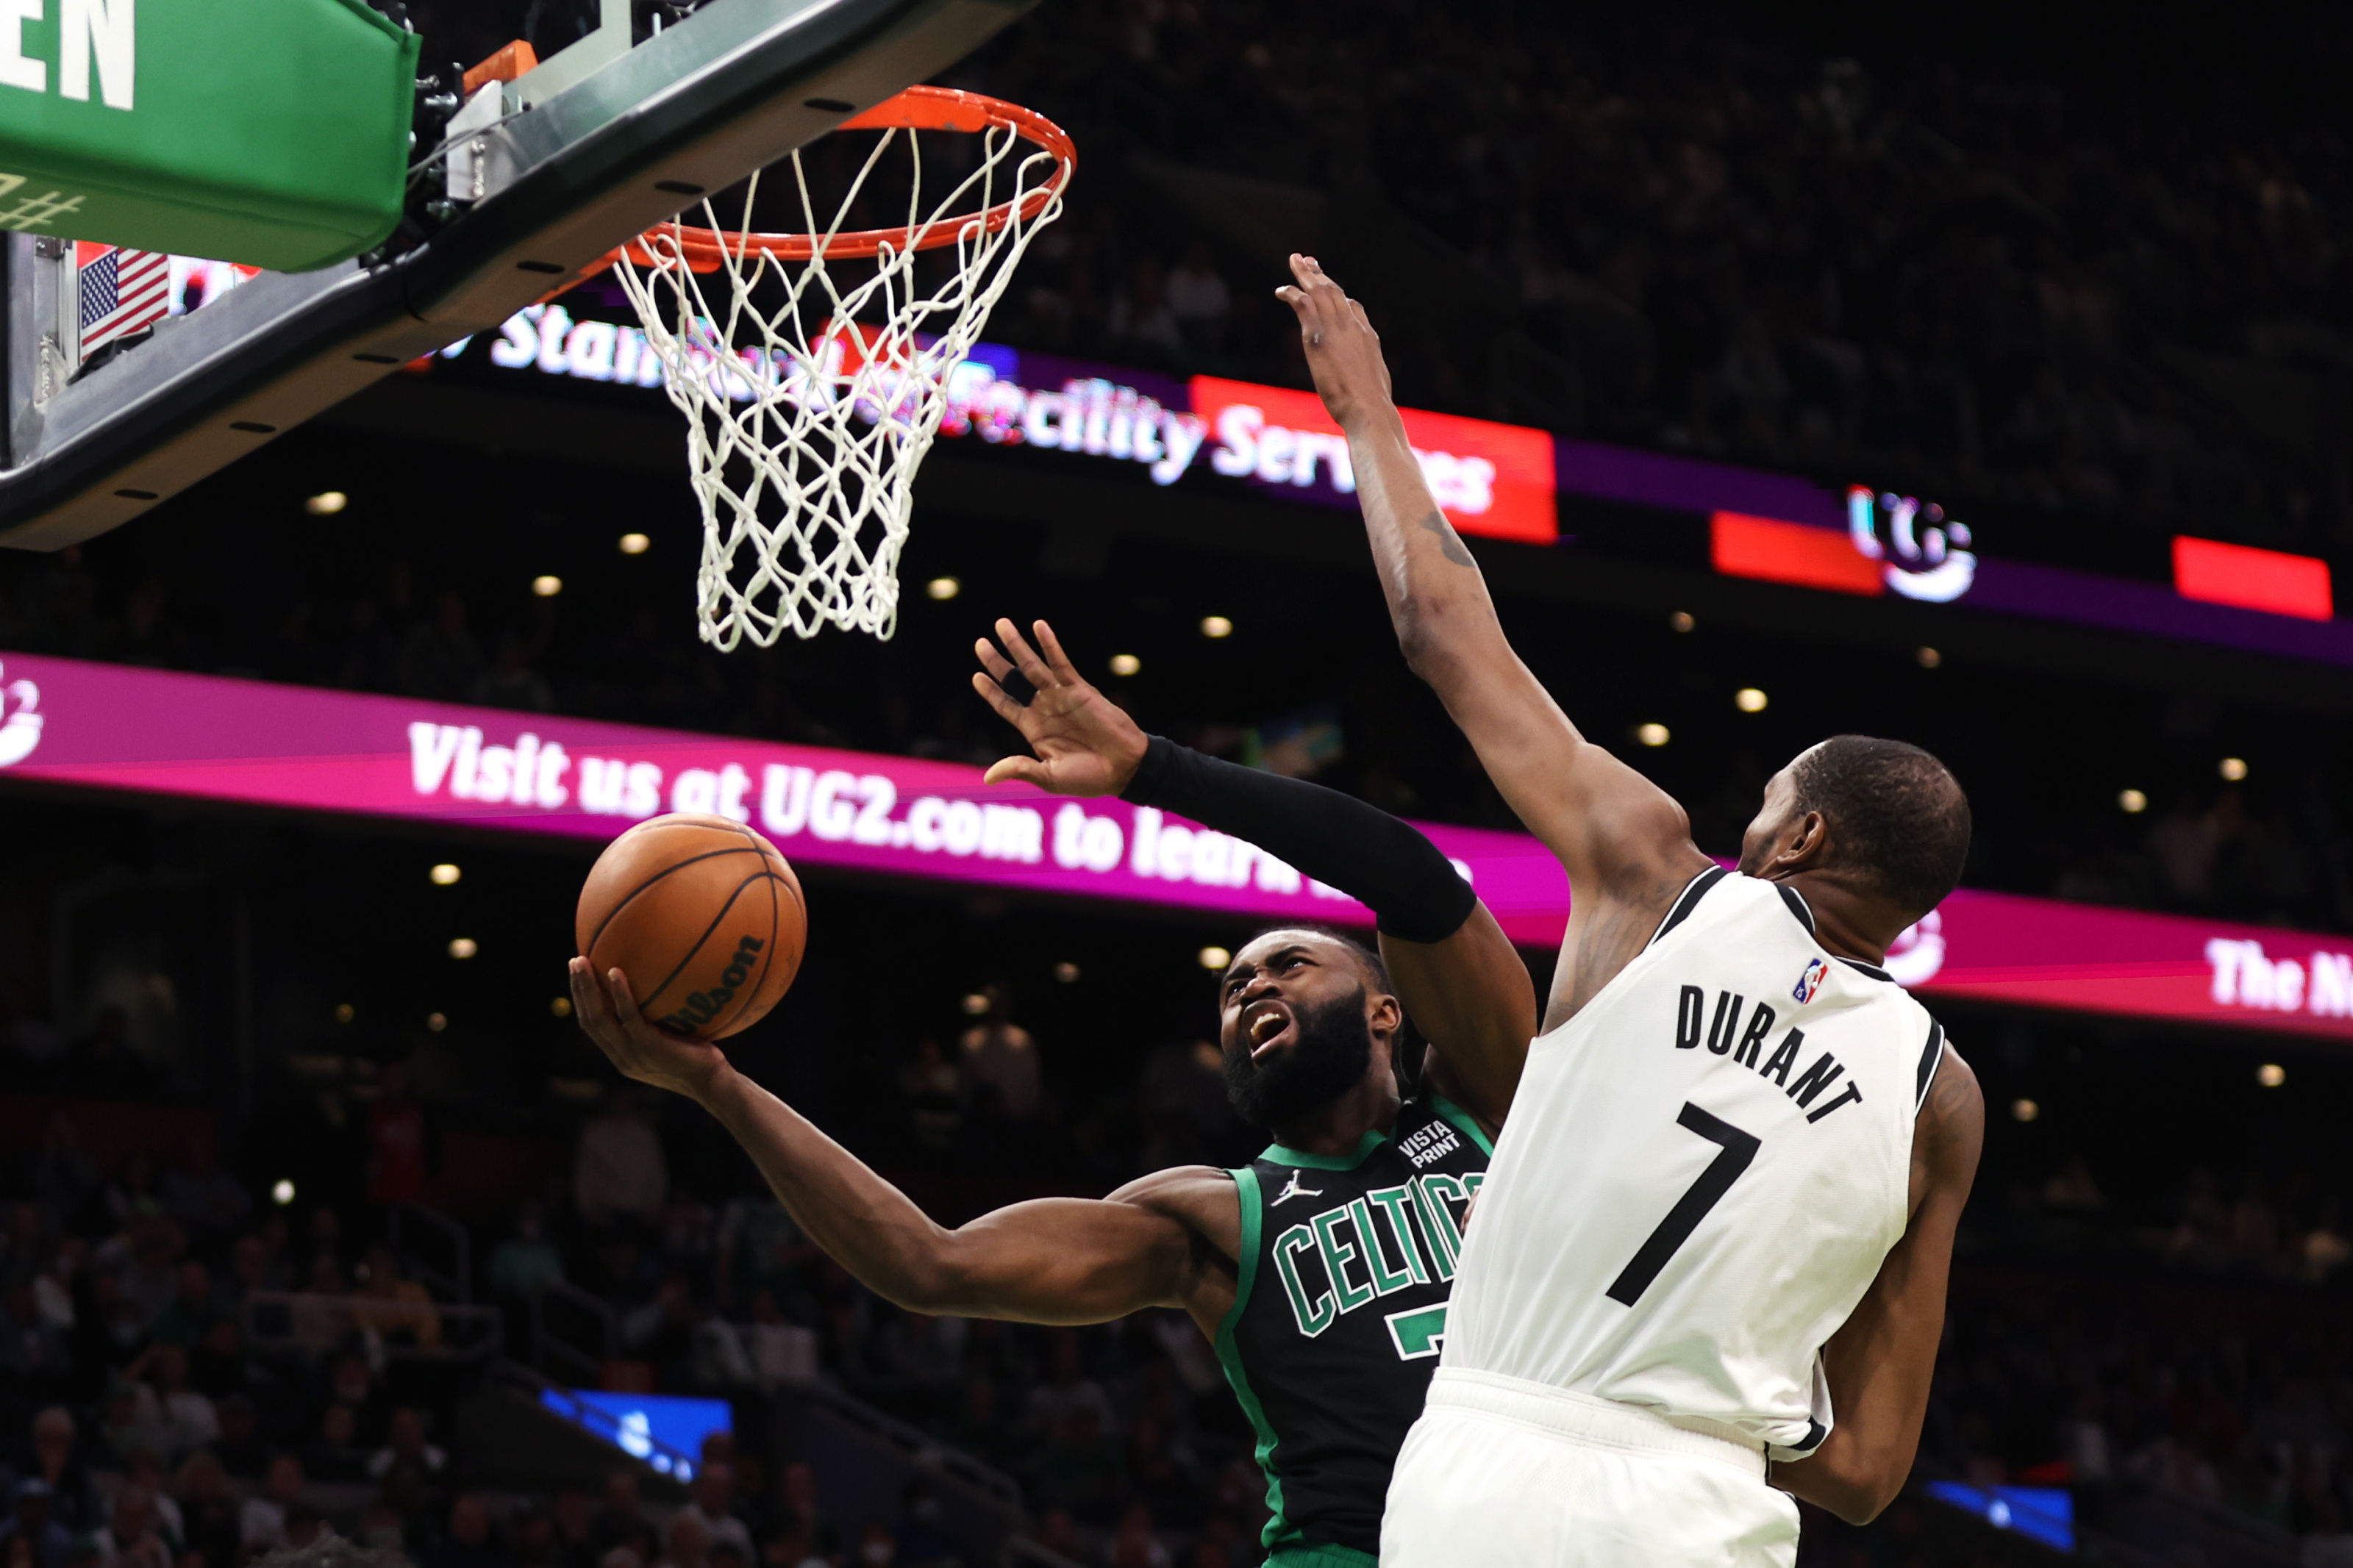 New Boston Celtics GM Brad Stevens Makes A Flurry Of Moves After